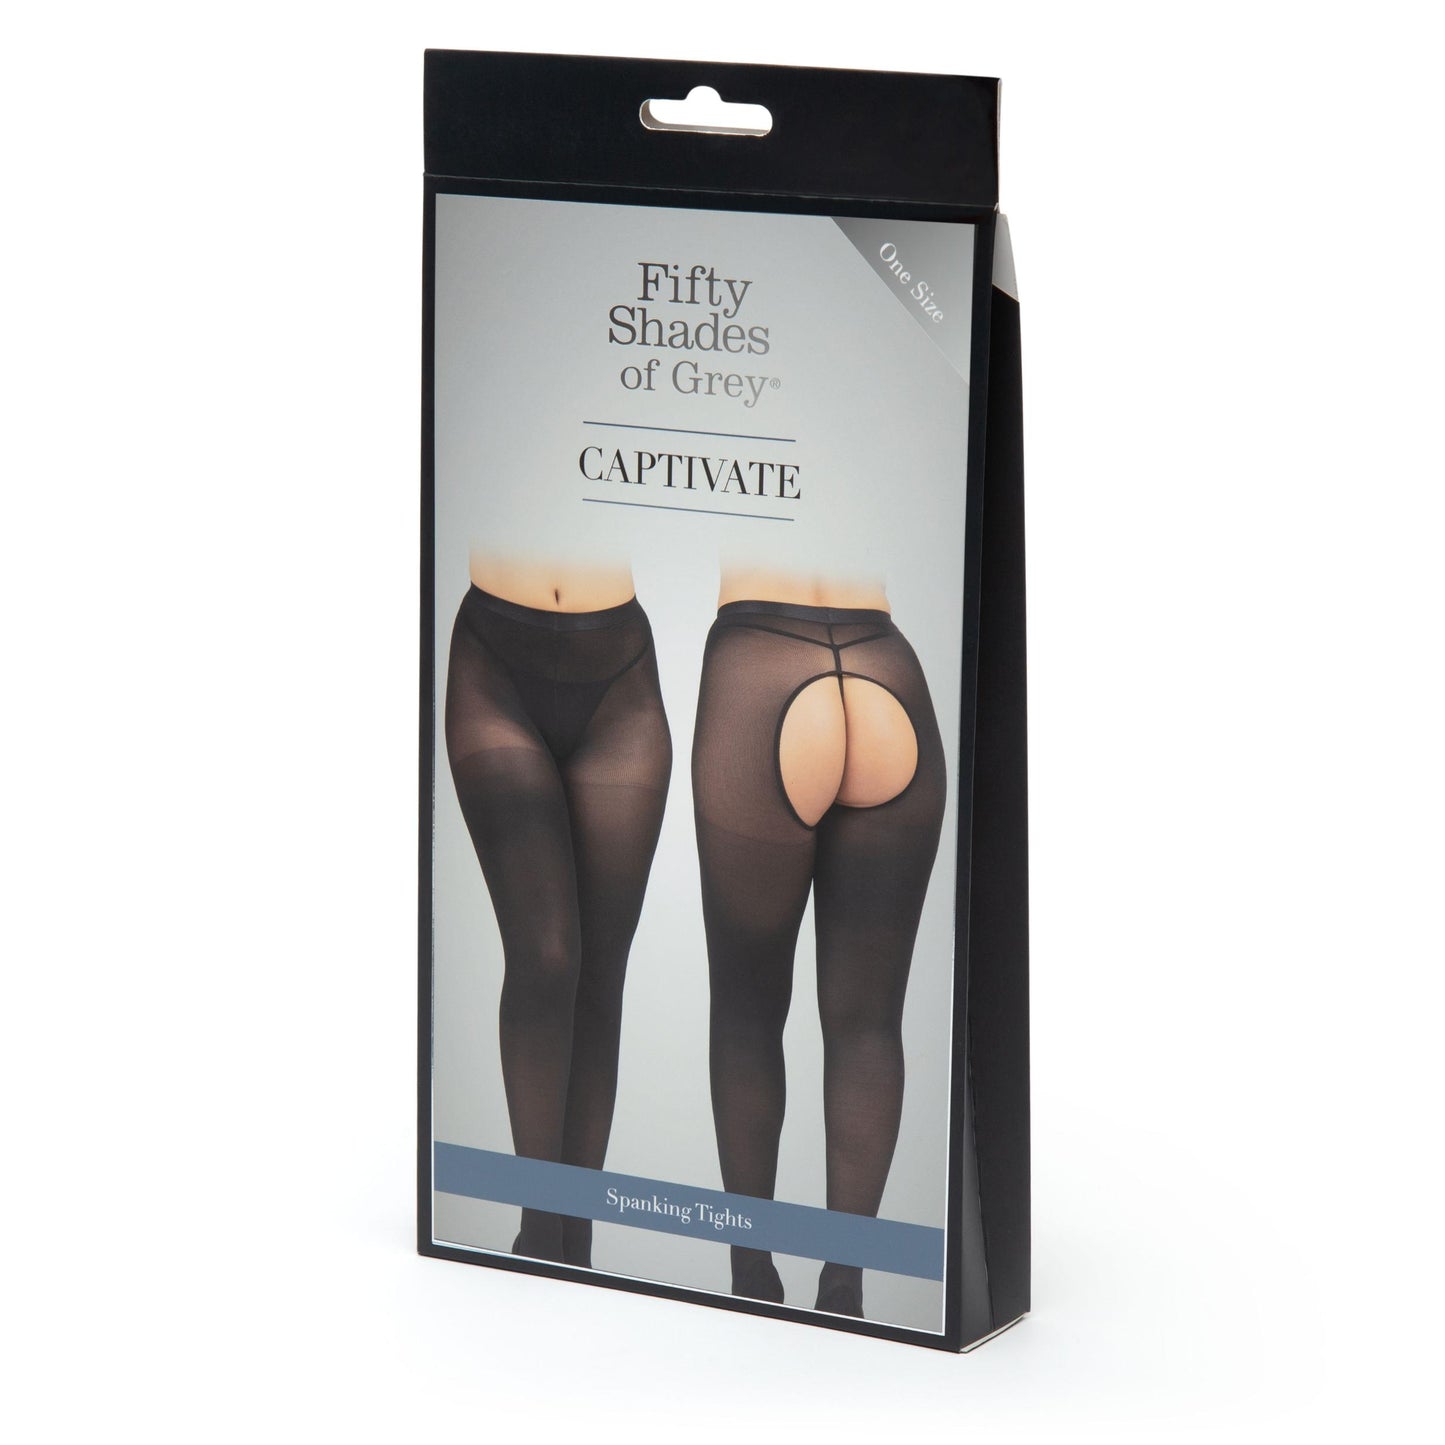 Fifty Shades of Grey Captivate Spanking Pantyhose - One Size - Black